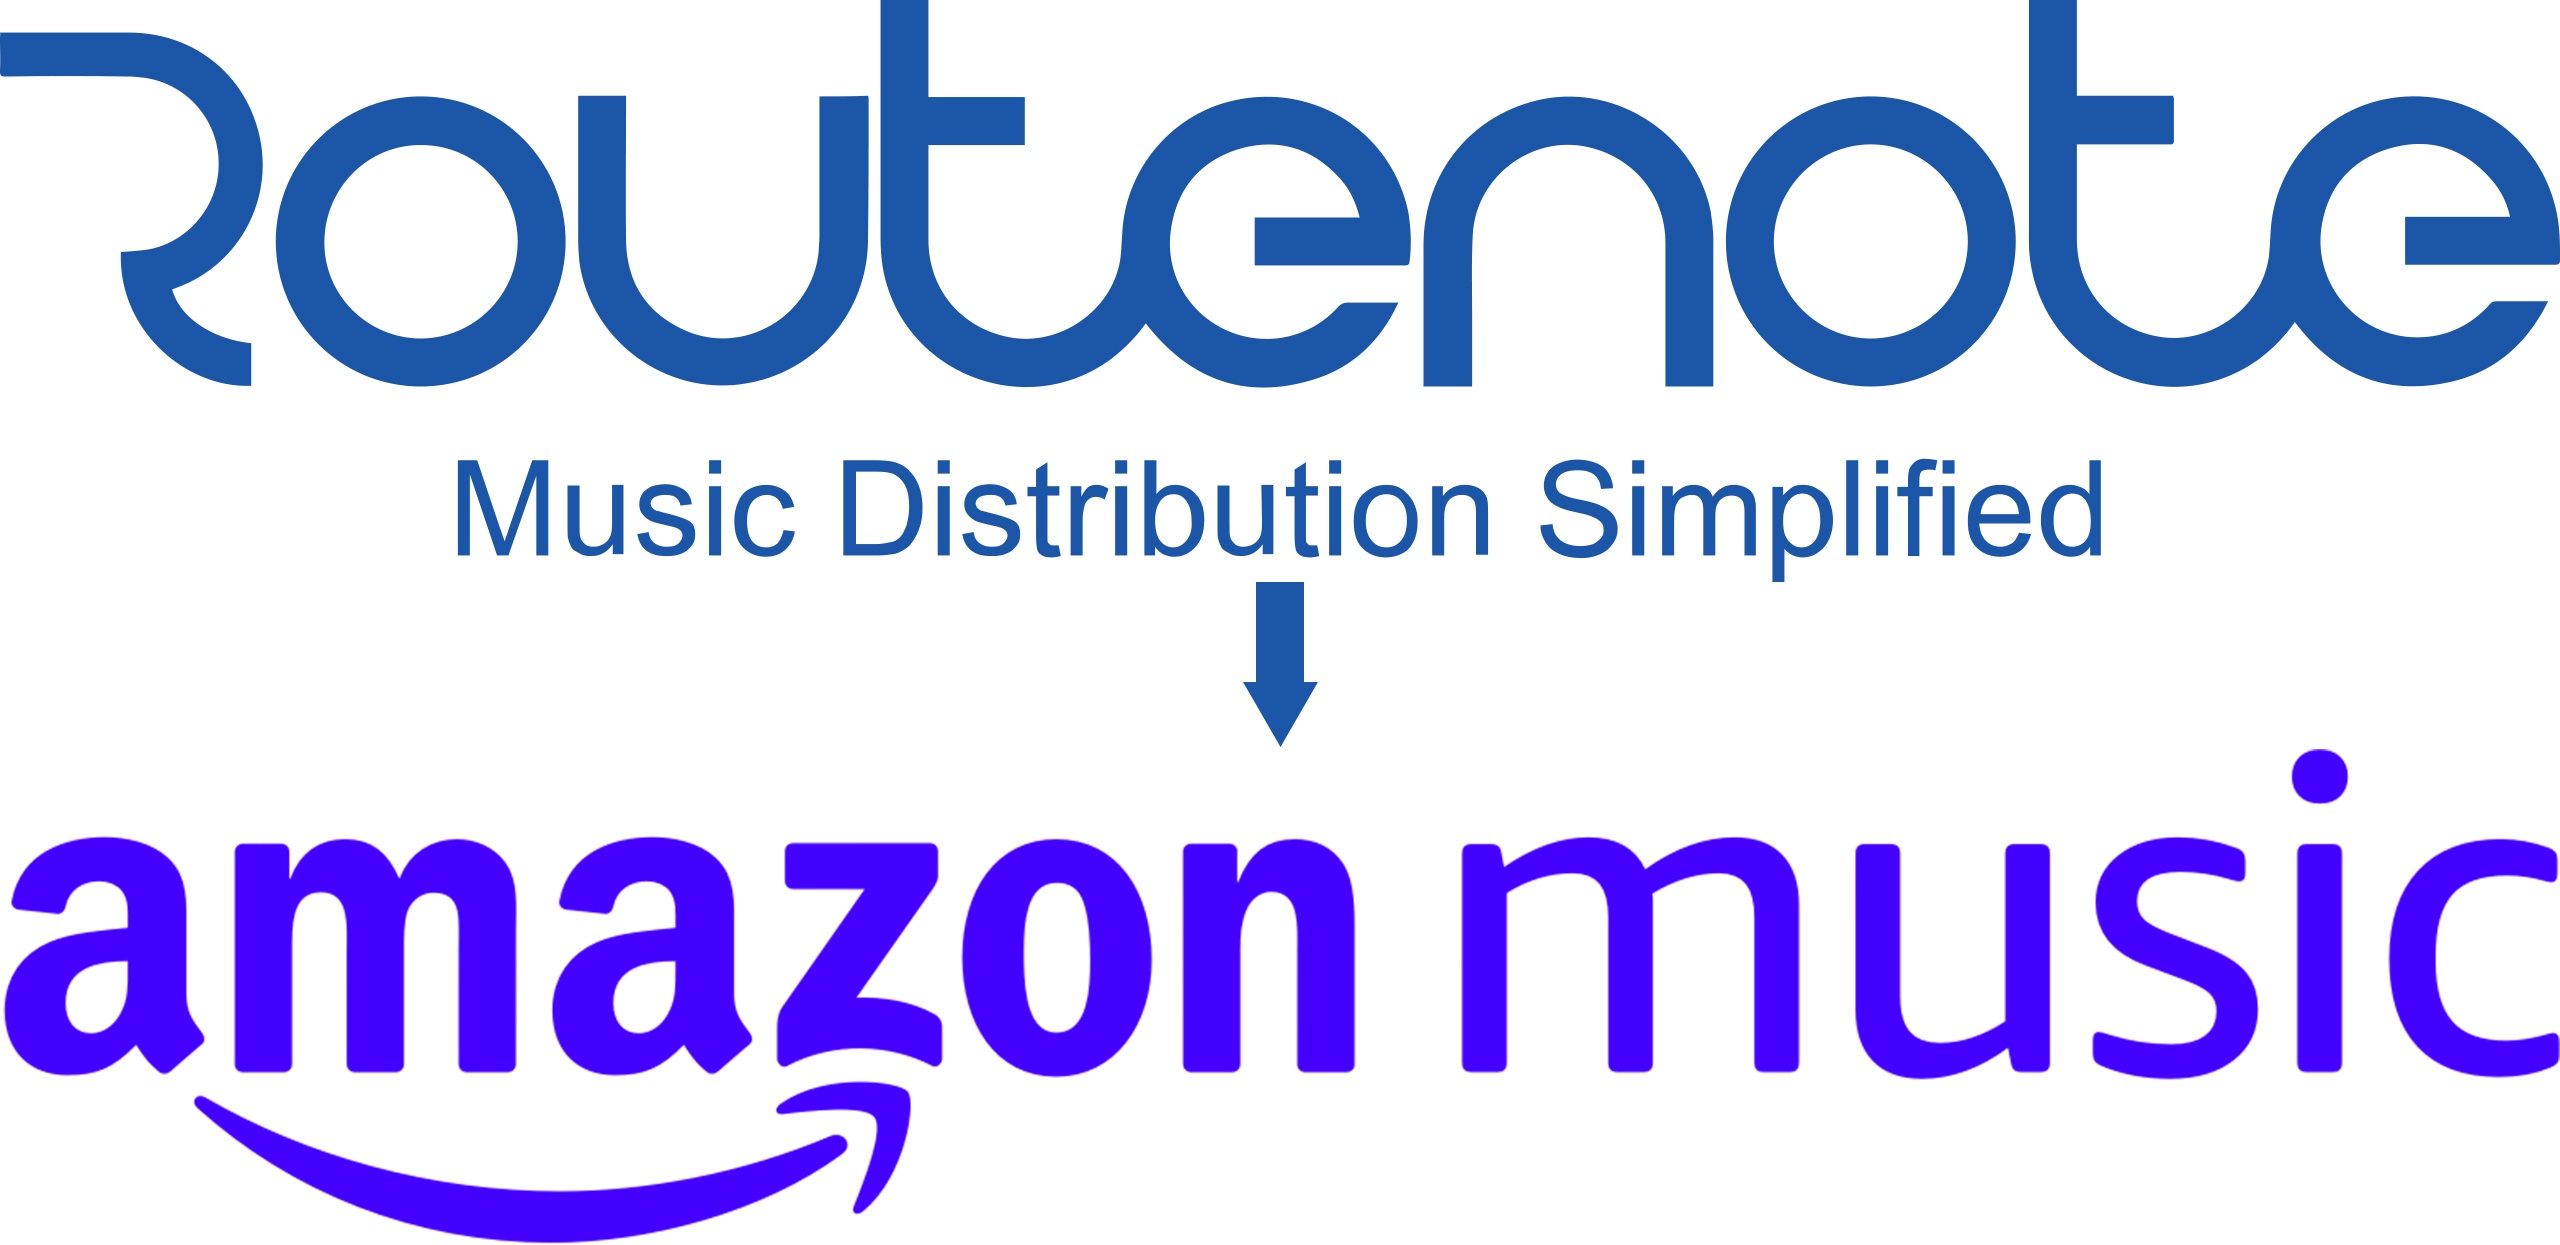 Does UnitedMasters distribute to Amazon Music?